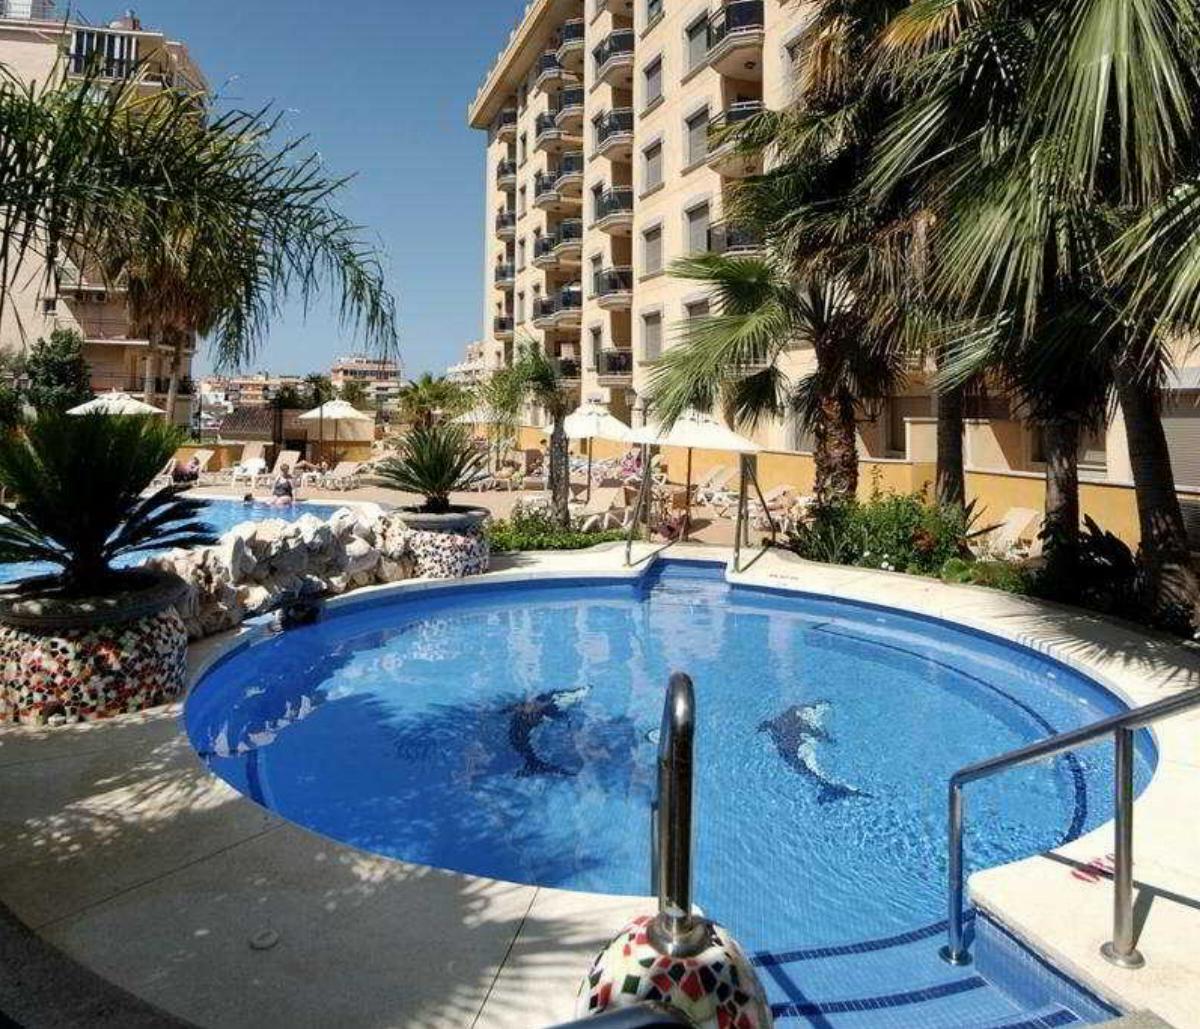 Mediterraneo Real Hotel Costa Del Sol Spain